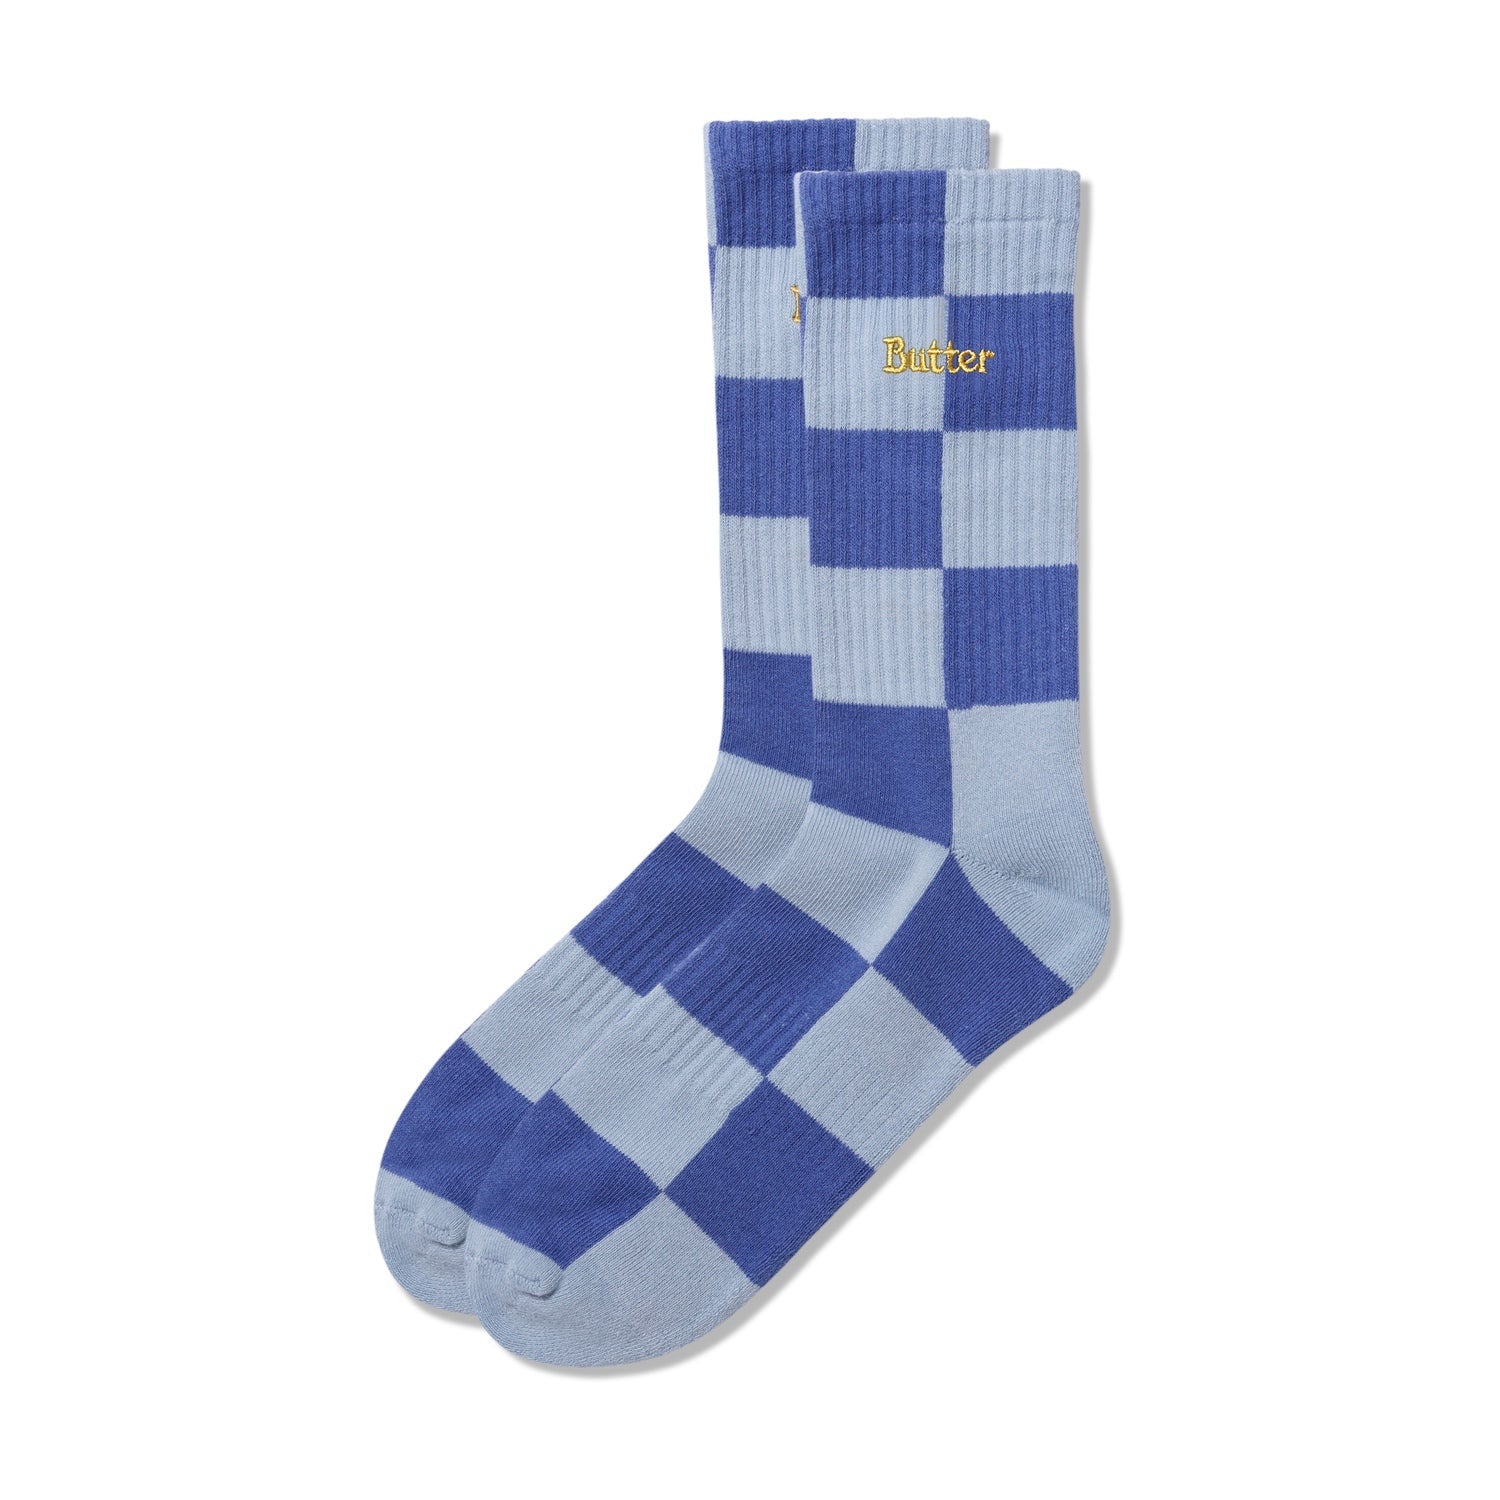 Checkered Socks, Powder Blue / Slate